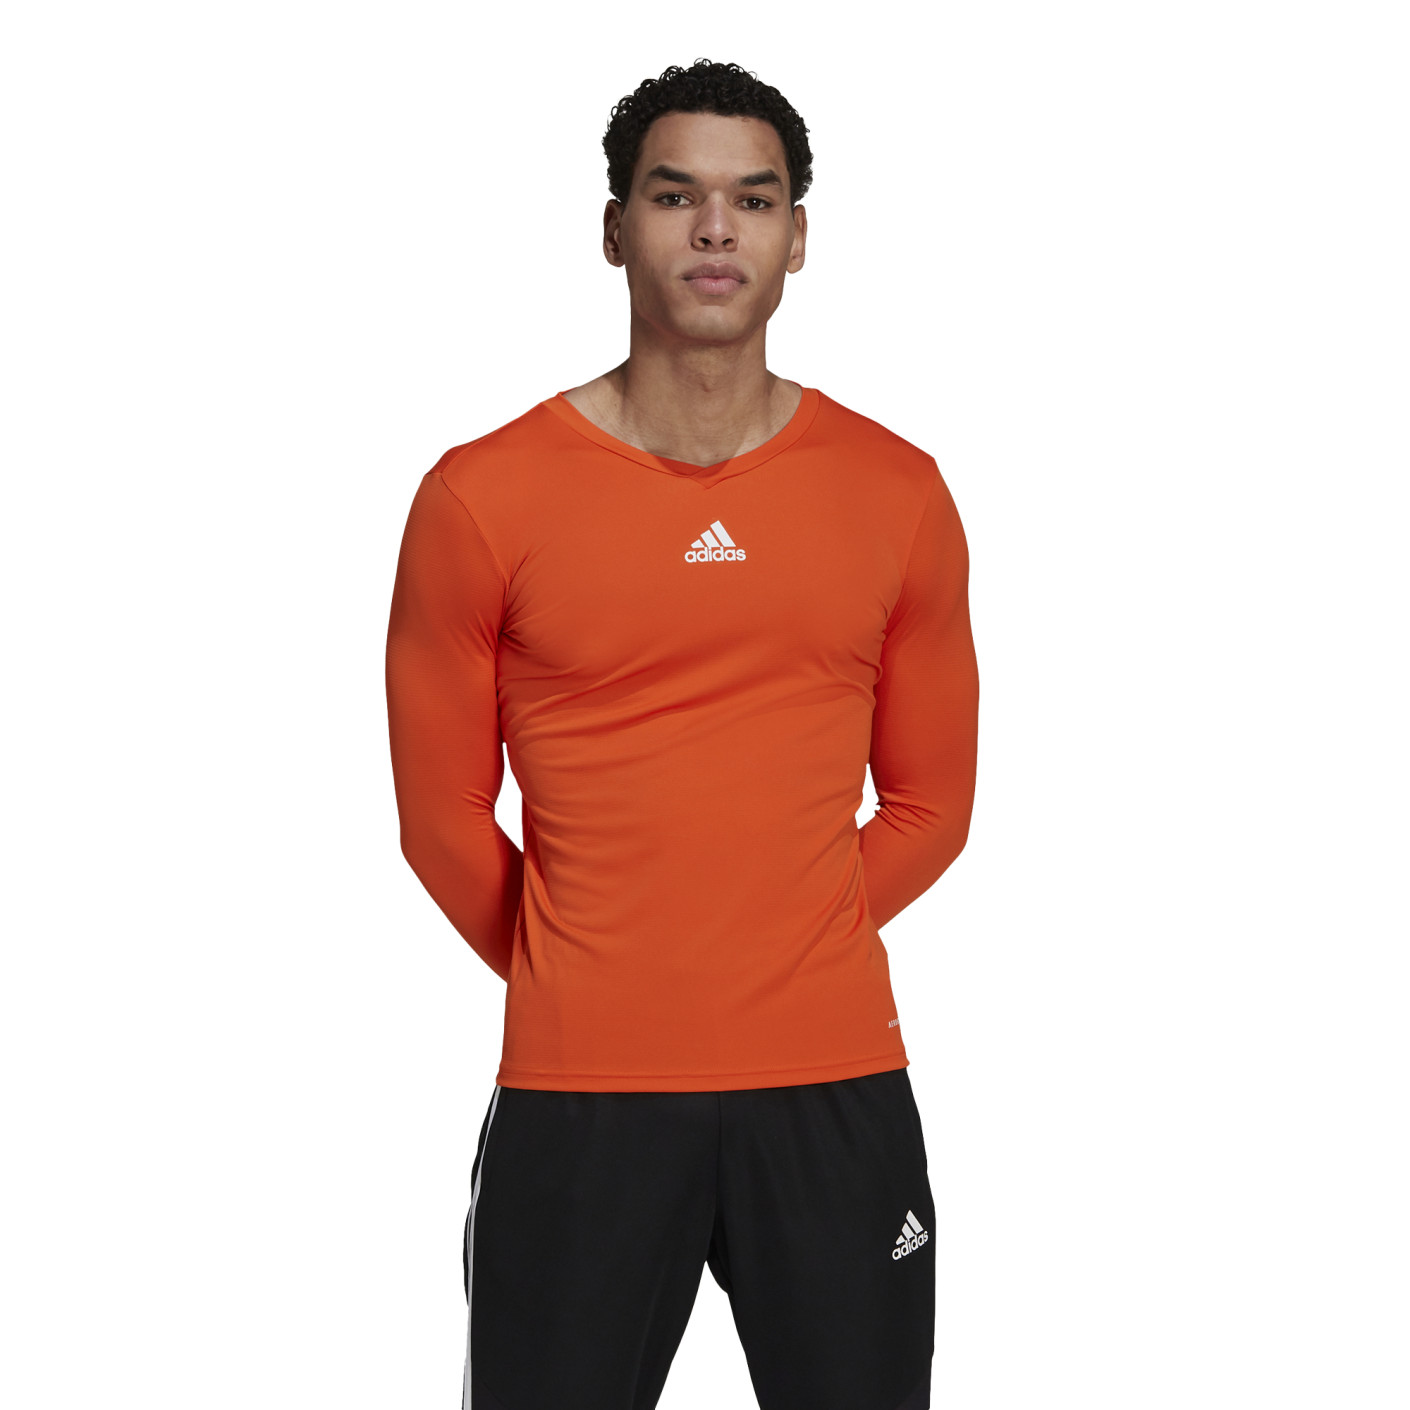 adidas Team Sous-Maillot Manches Longues Orange